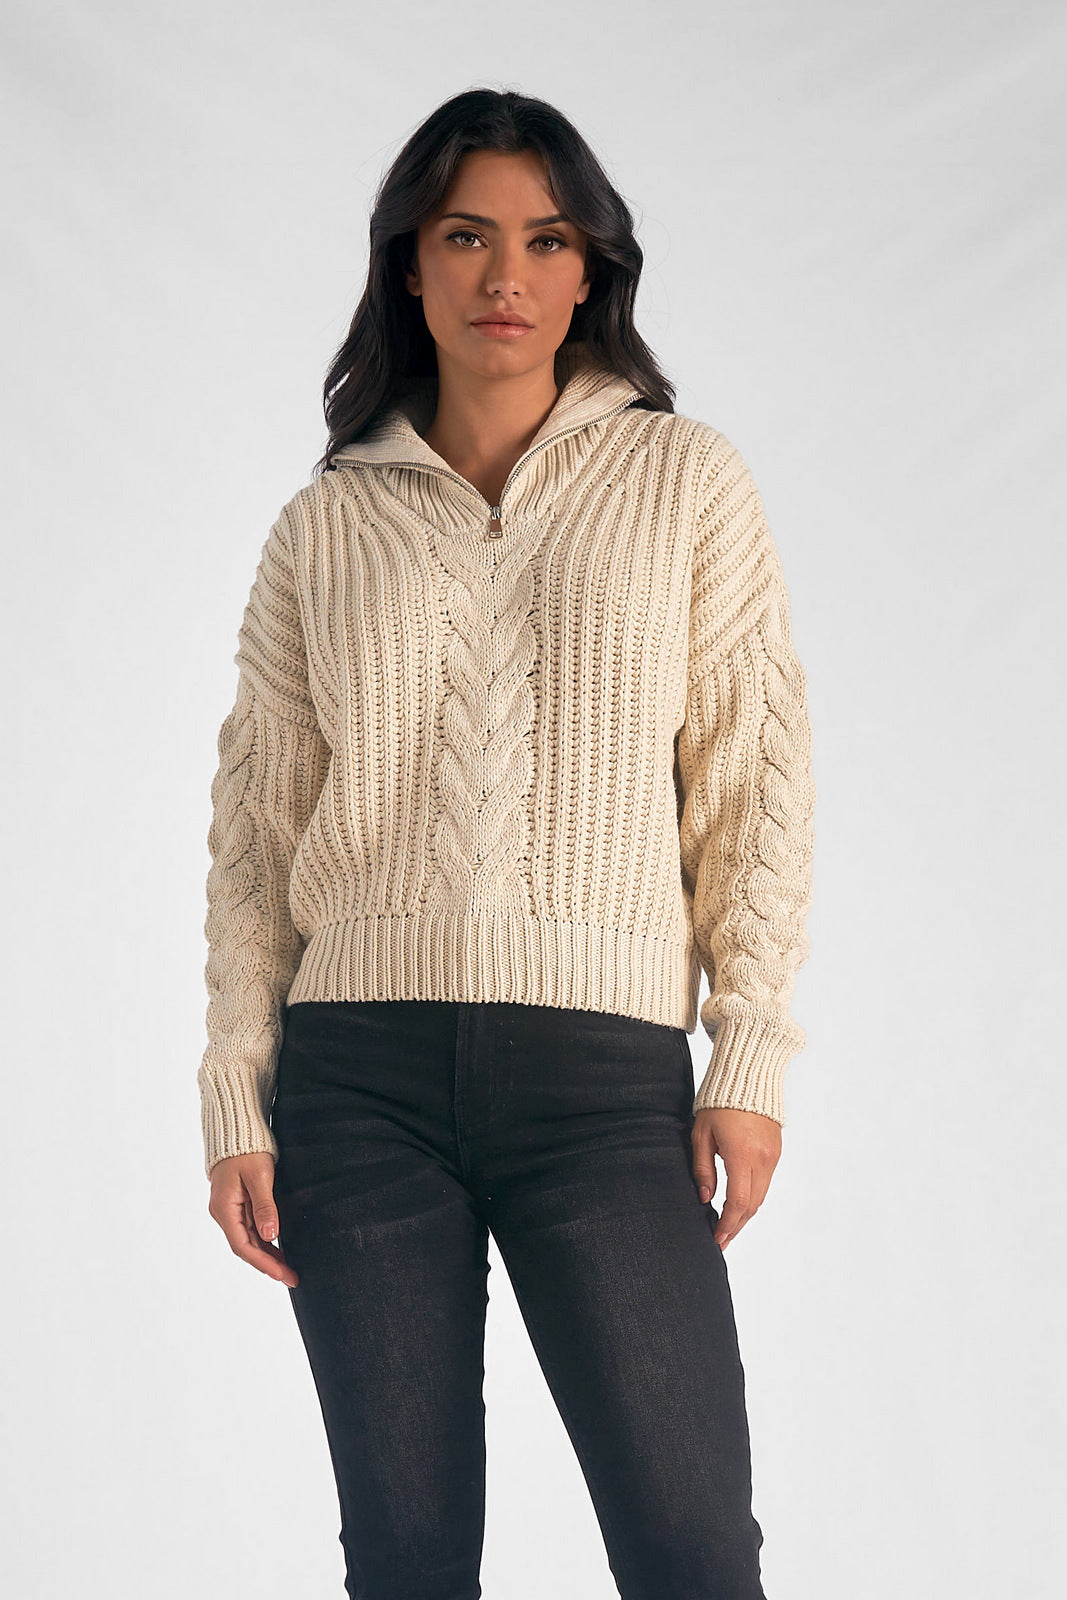 Everest Sweater - Shop Elan